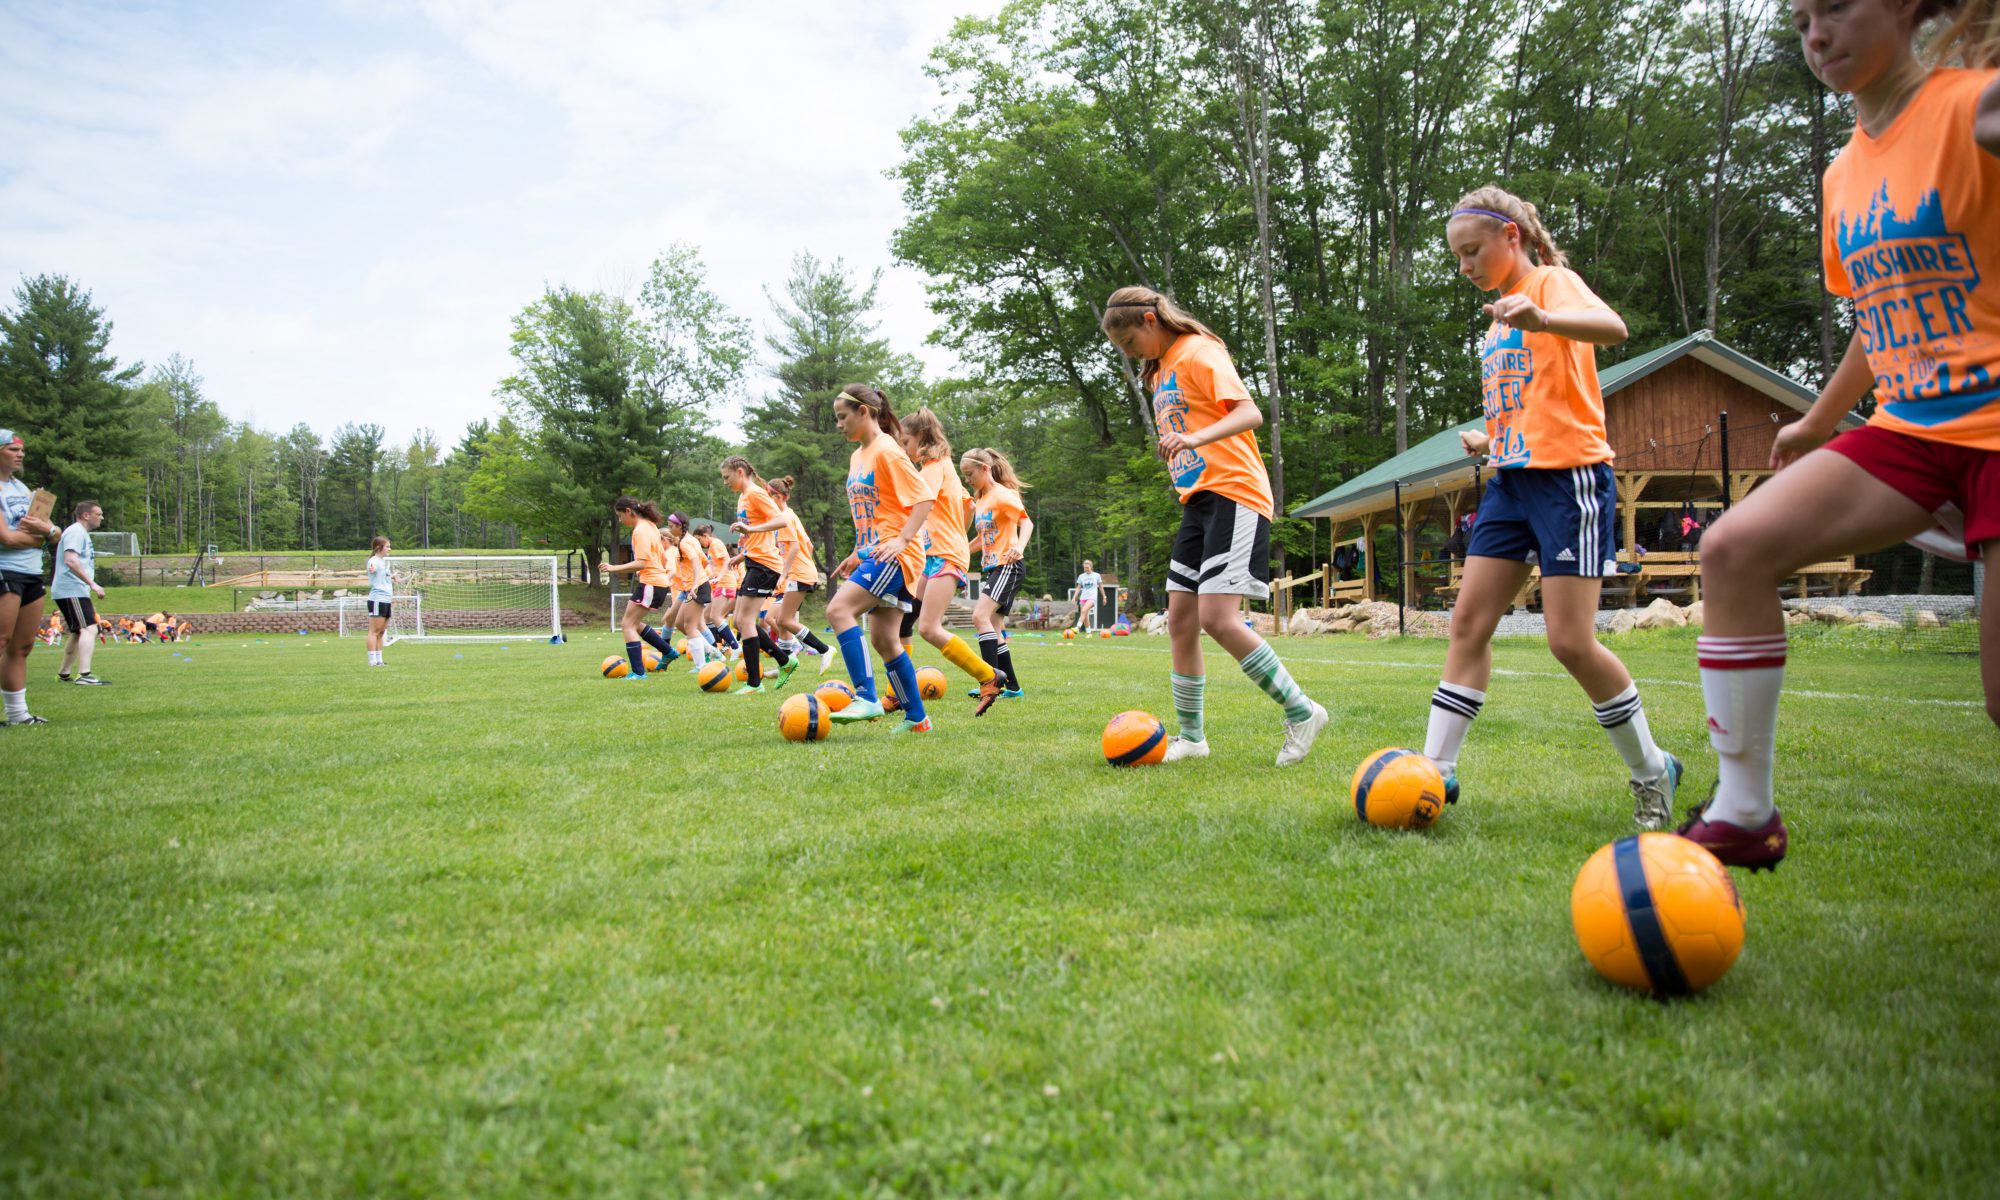 berkshire girls playing soccer at summer camp